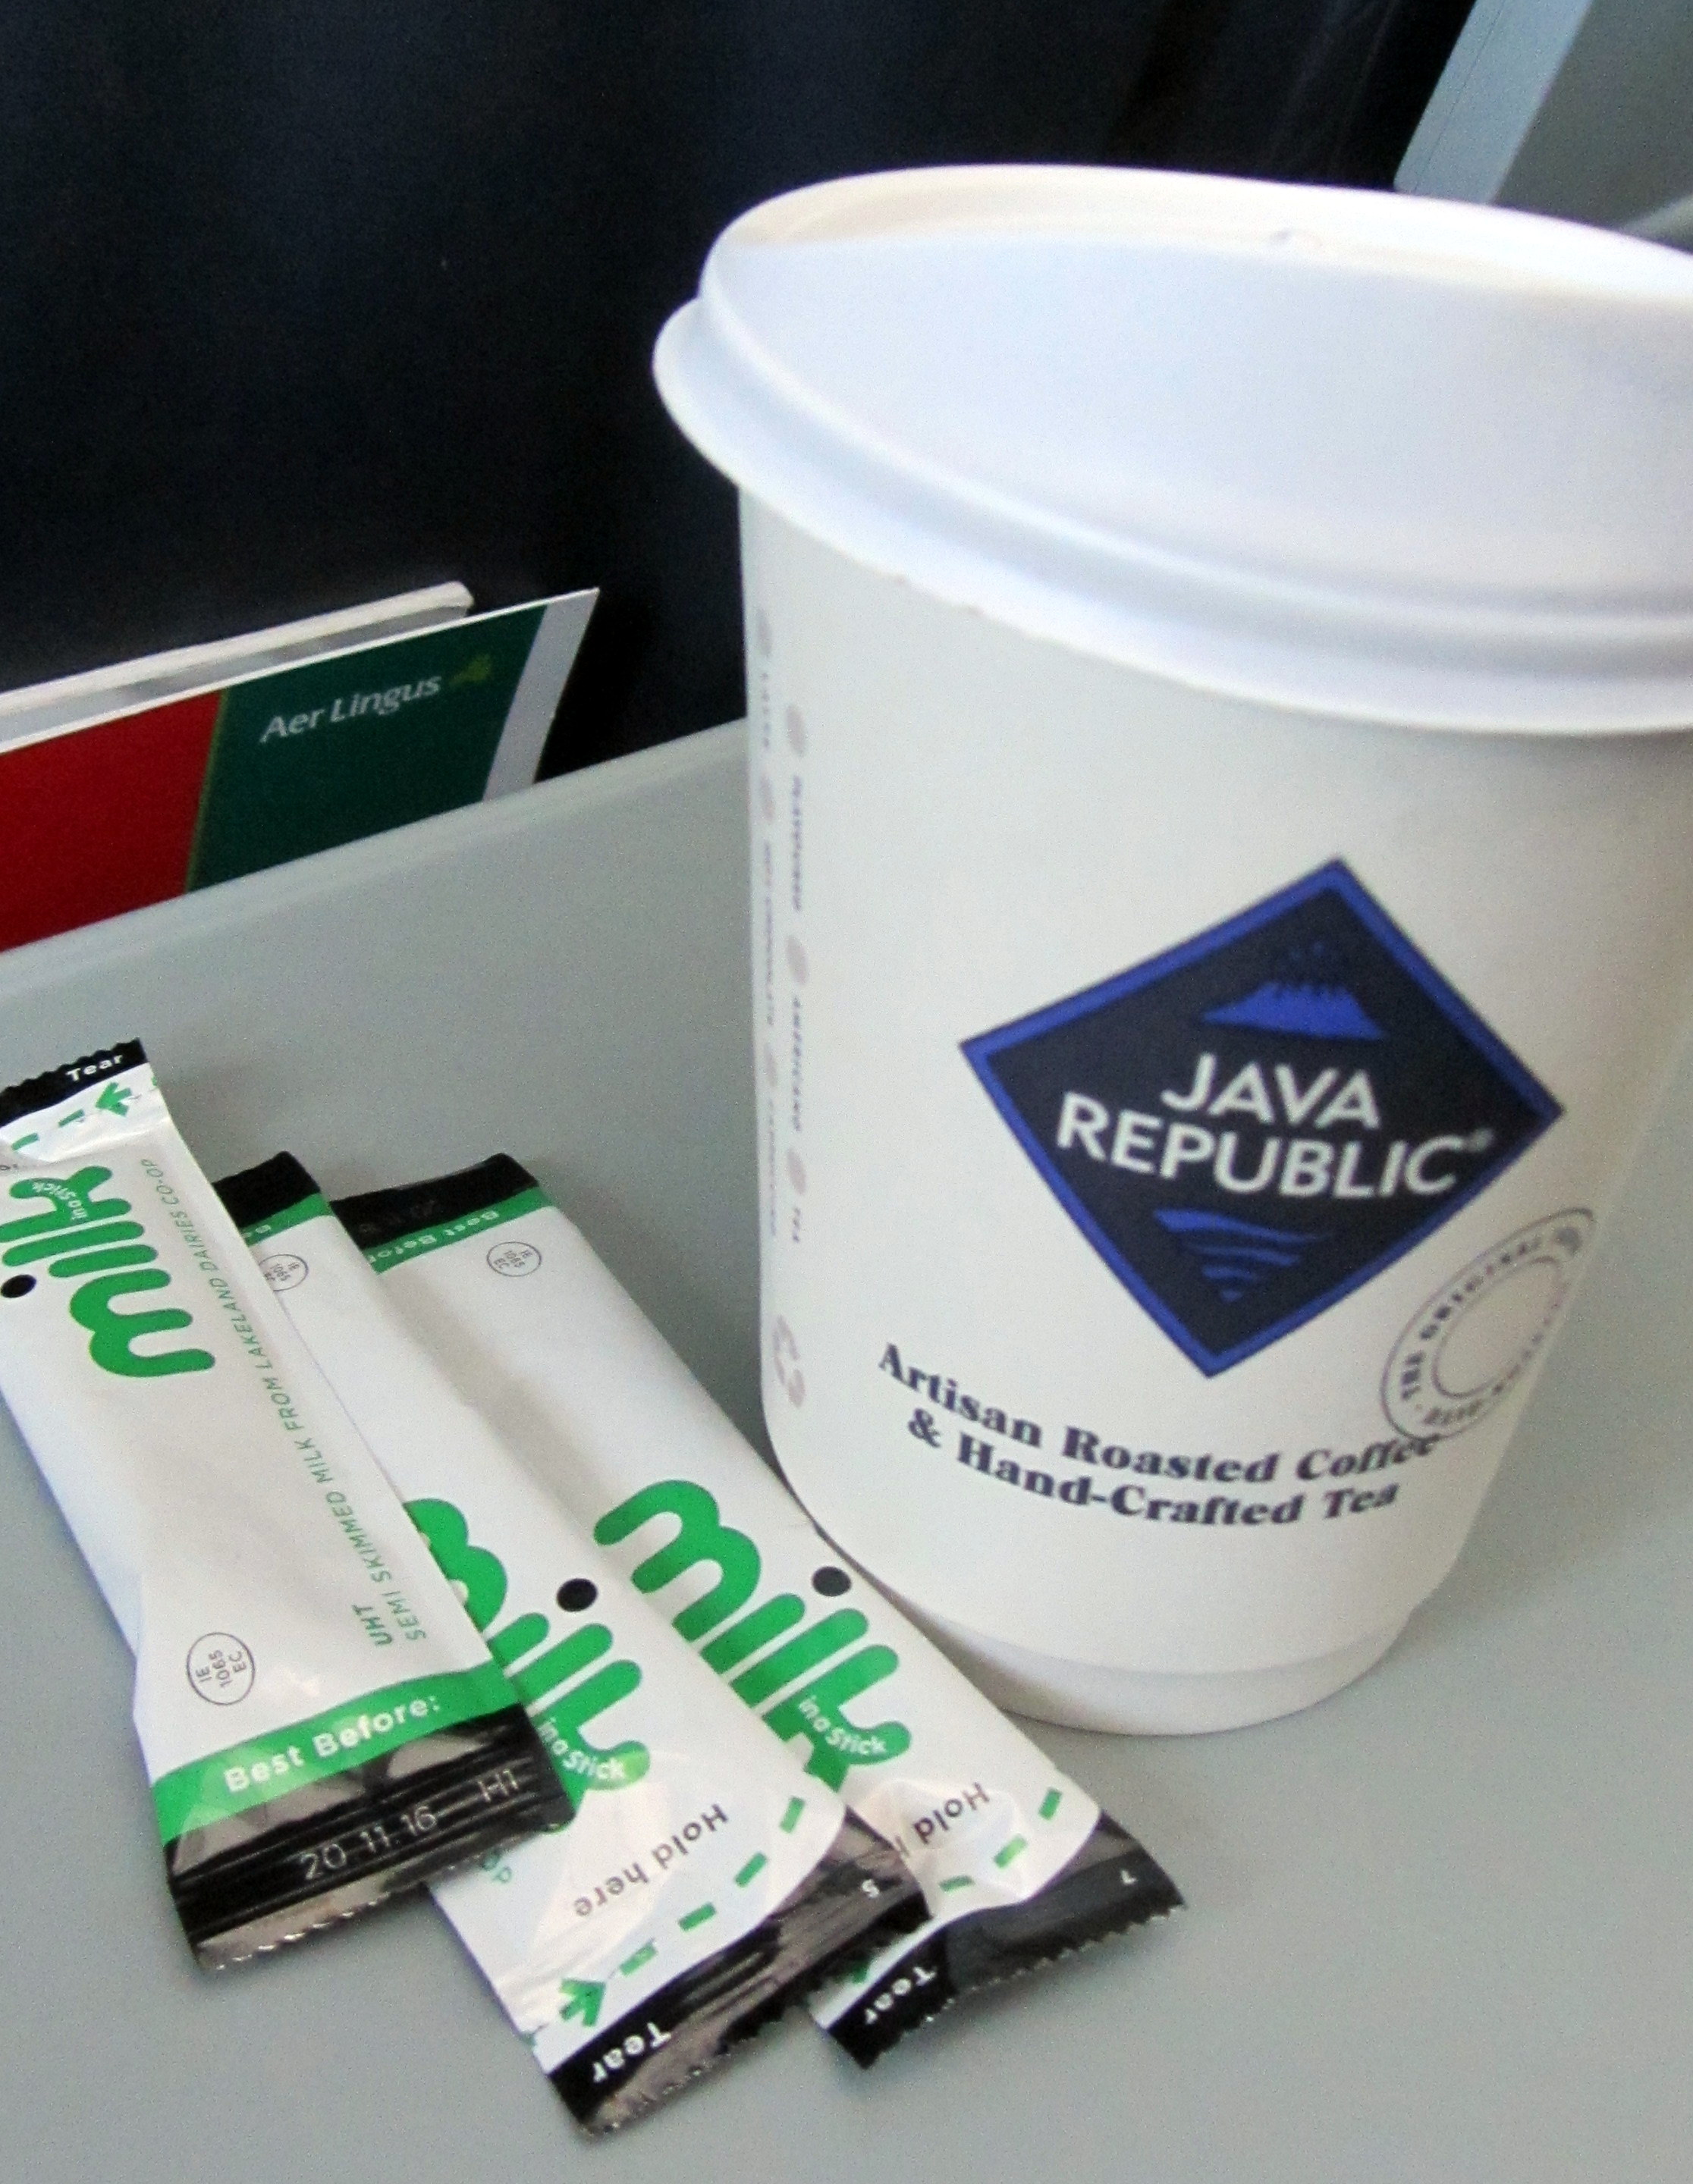 Ryanair has Lavazza, Aer Lingus has Java Republic: excellent coffee!